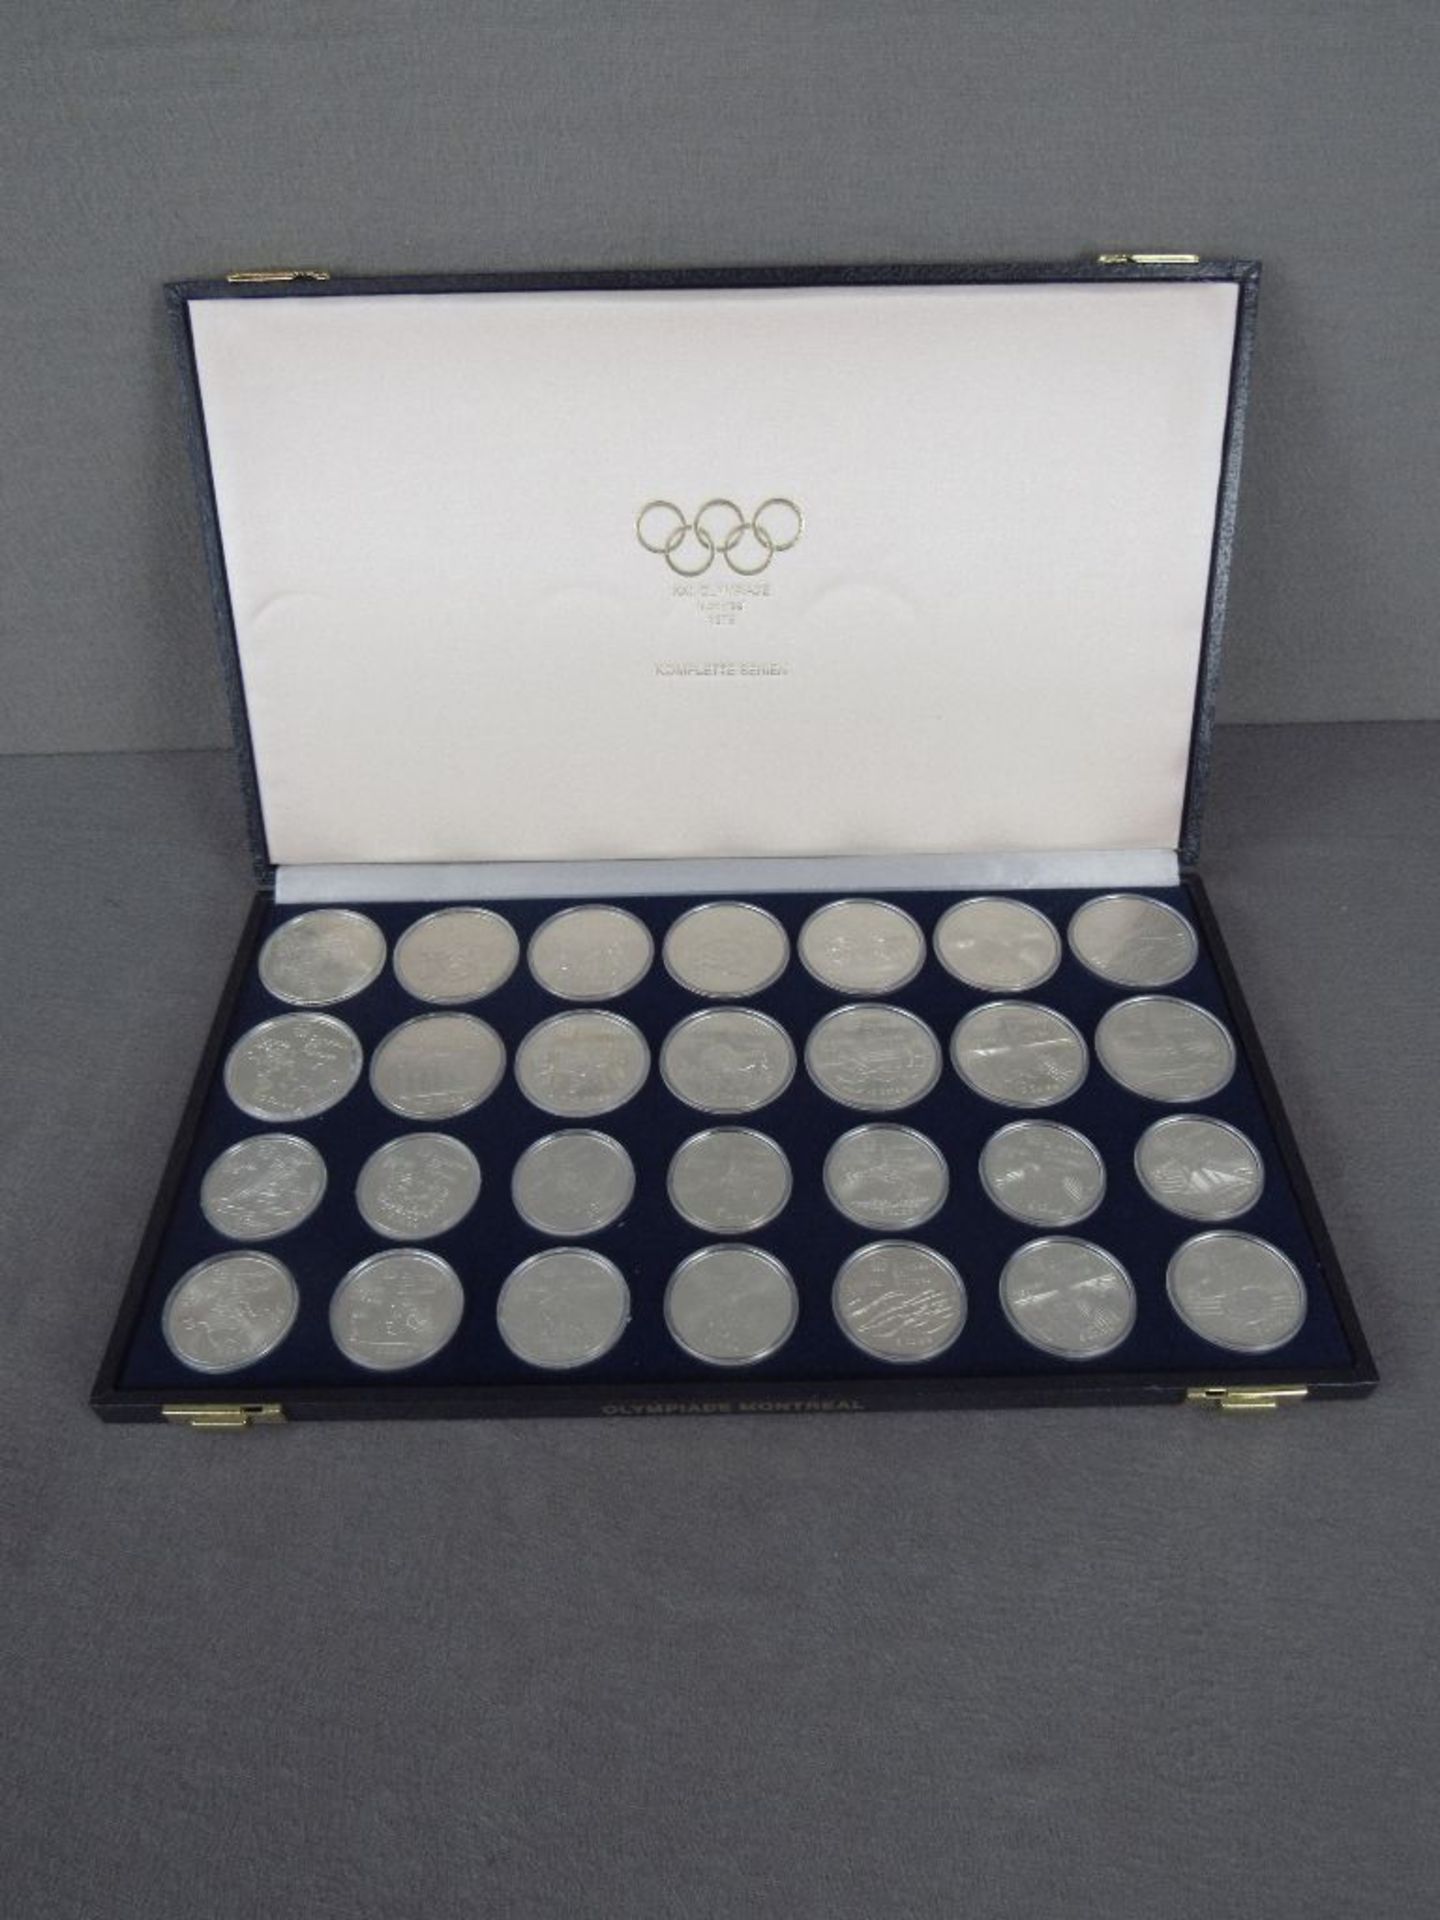 Canada Silbermünzen Olympia 1976 komplett